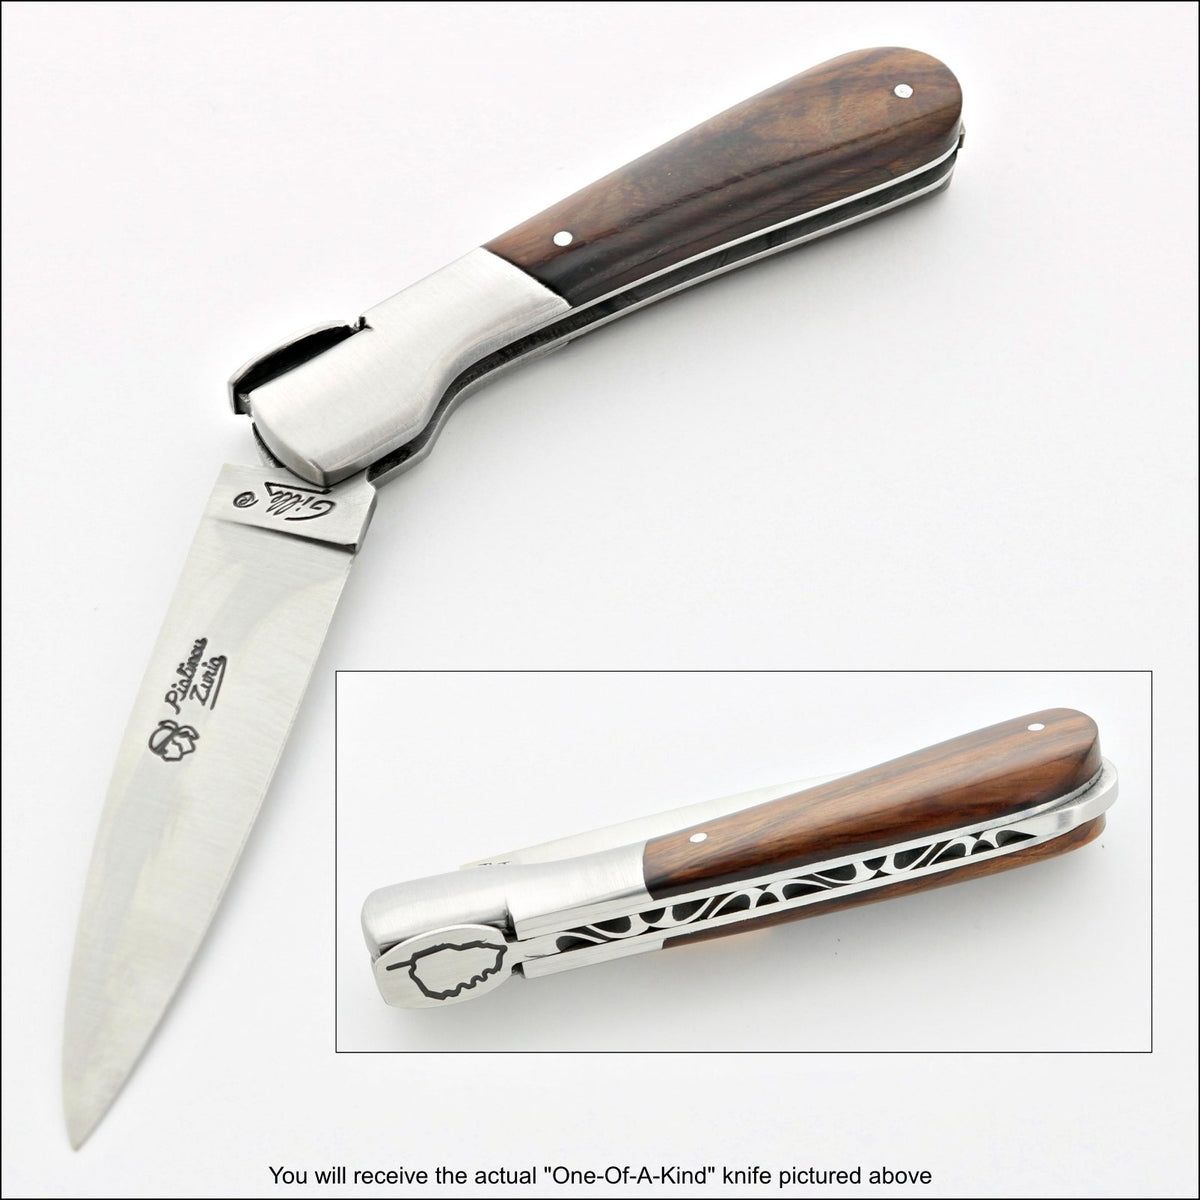 Corsican Pialincu Folding Knife Ironwood Handle-POCKET KNIFE